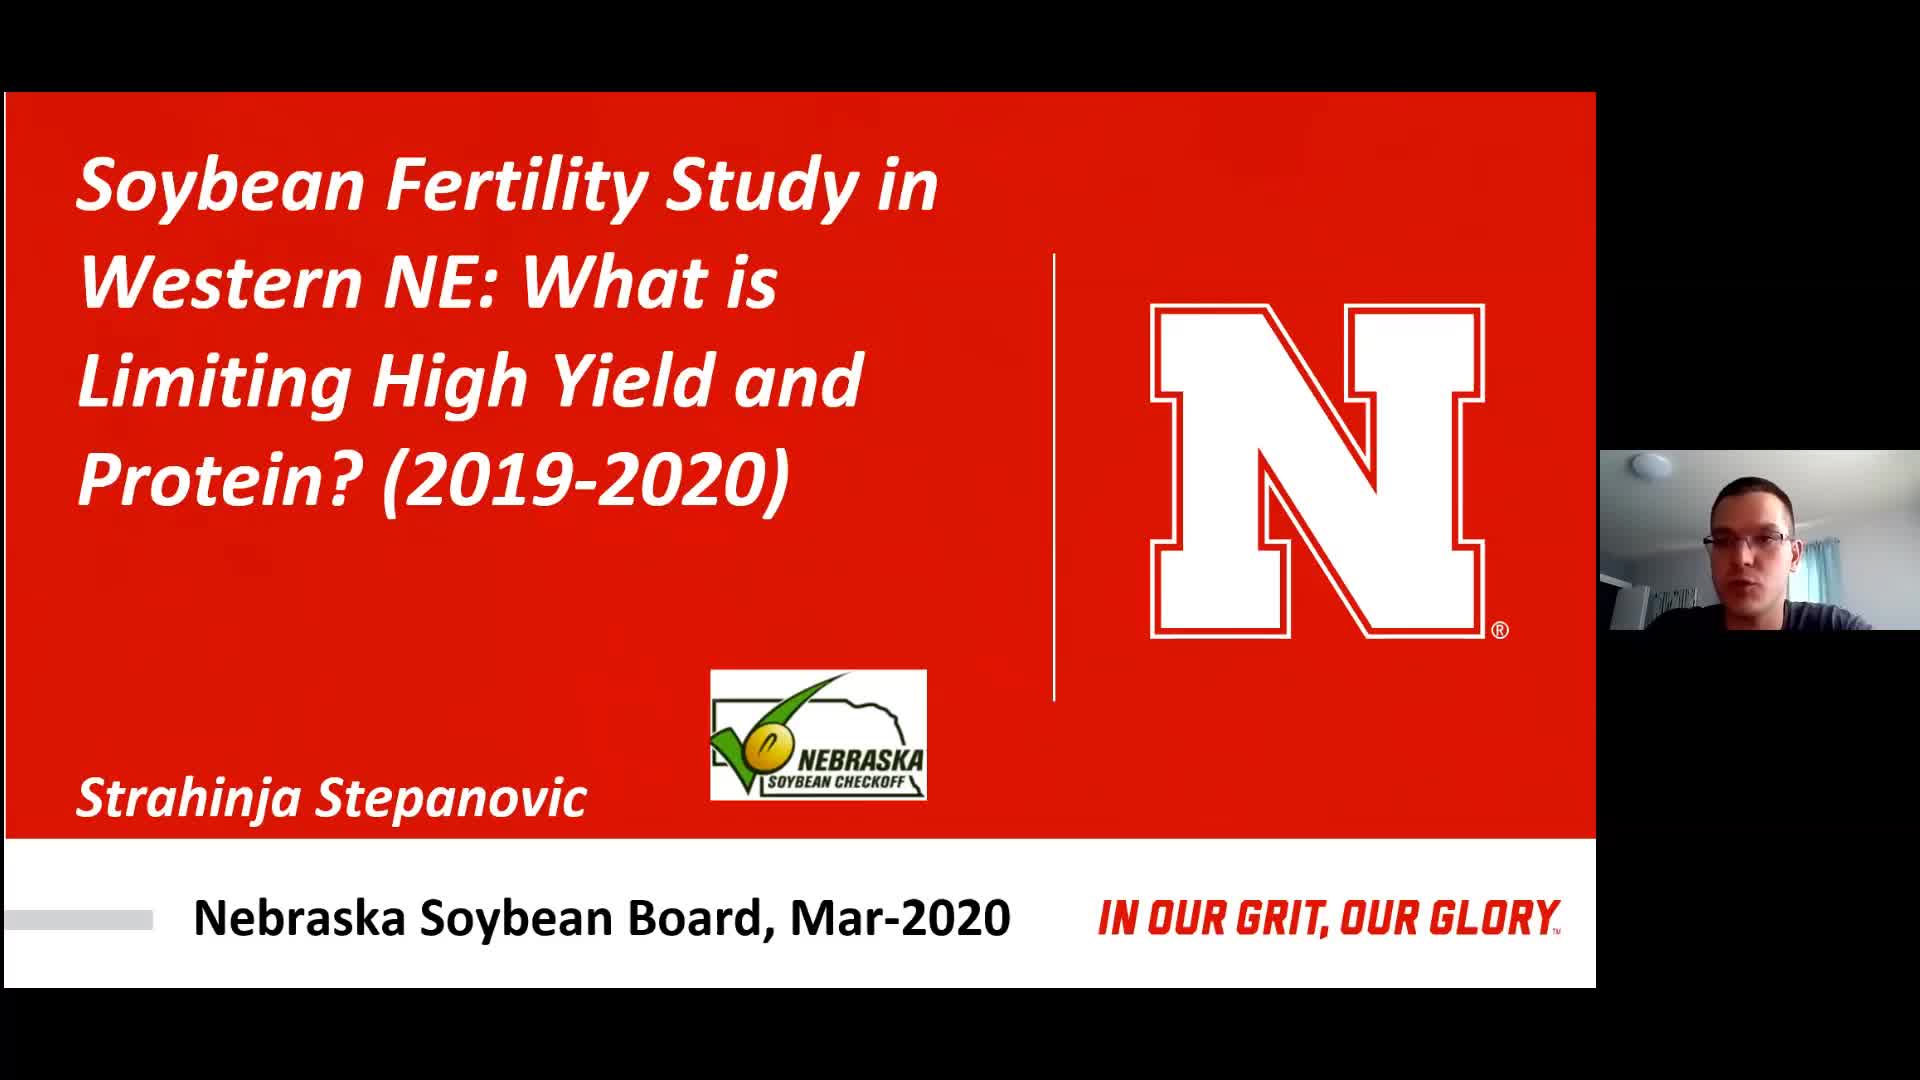 Stumpf Farm – Soybean Board Population/Fertility Study 